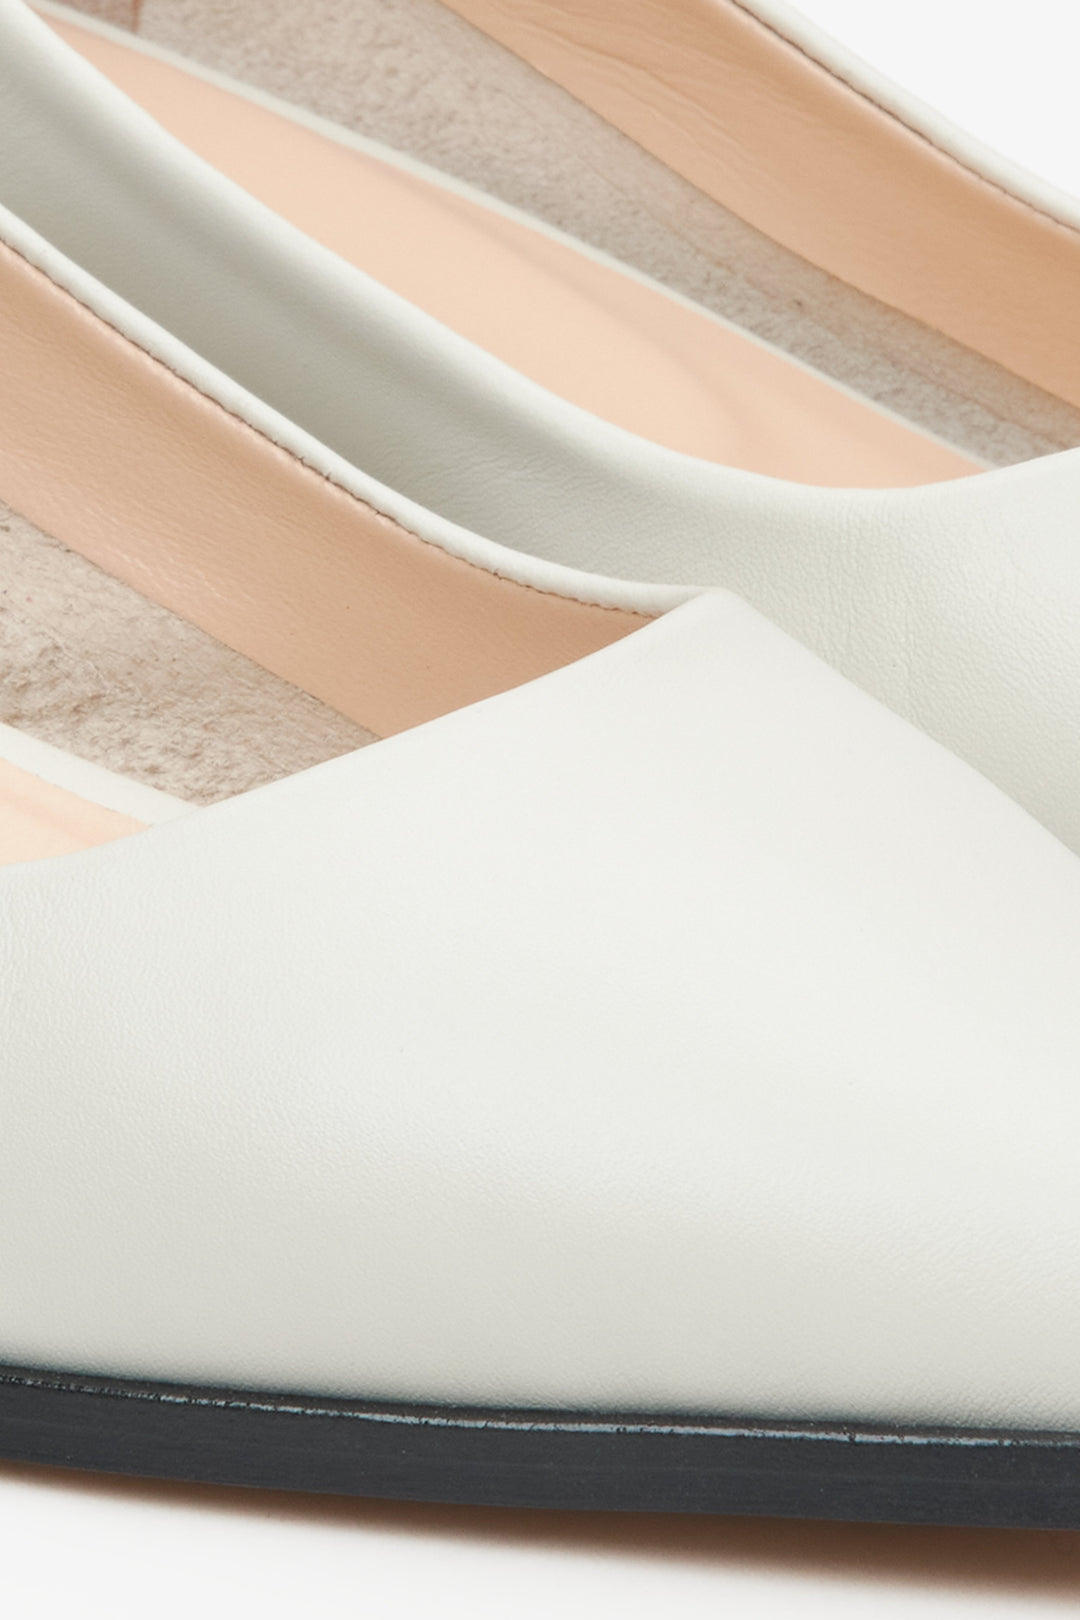 Women's leather light beige pumps by Estro - close-up on the details.